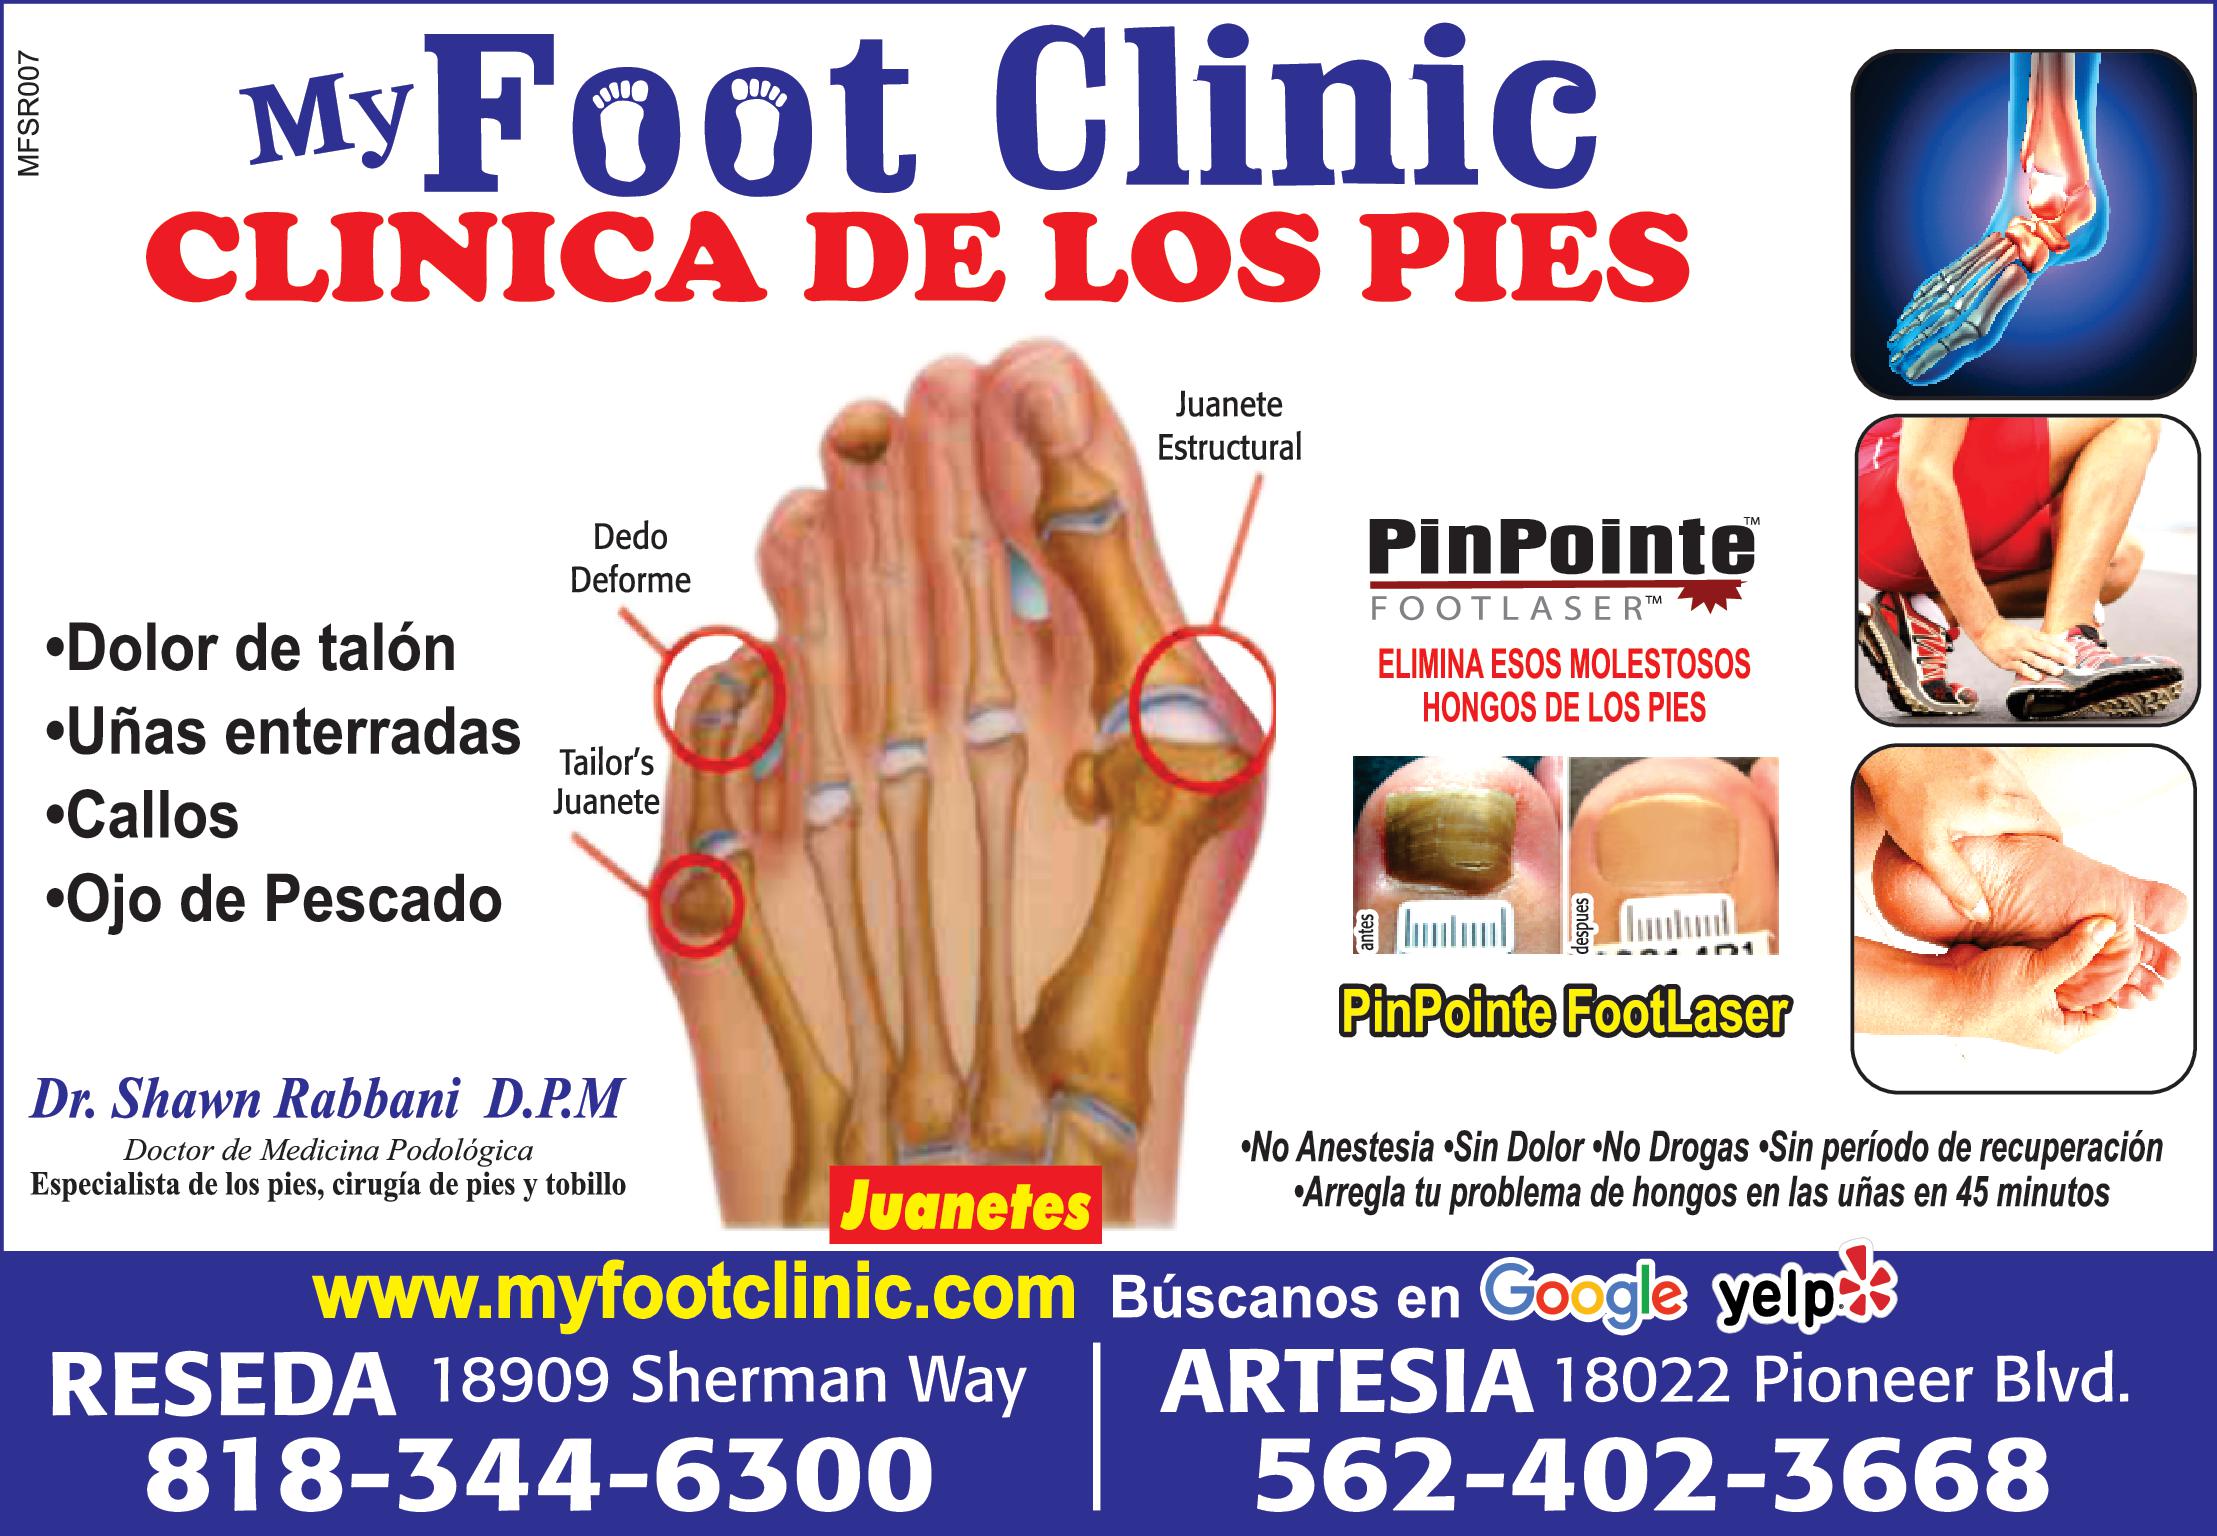 My Foot Clinic Dr. Shawn Rabbani